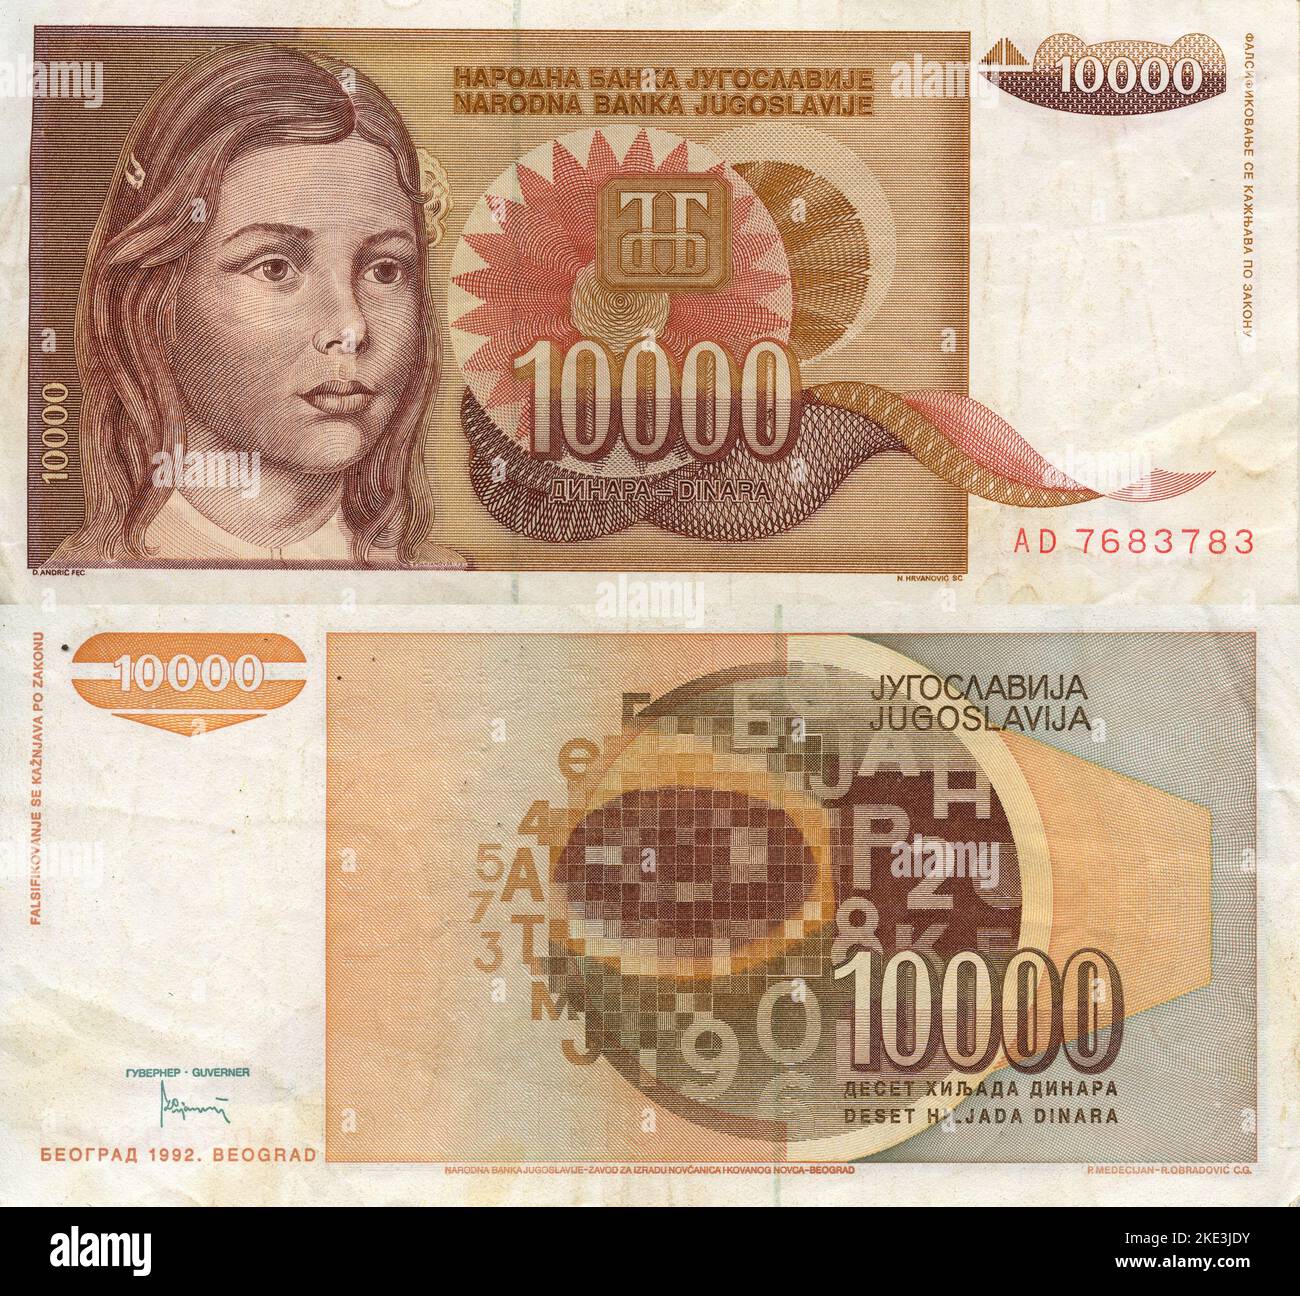 Central Bank of Socialist Federal Republic of Yugoslavia 10000 Dinara Banknote, Belgrade 1992 Stock Photo